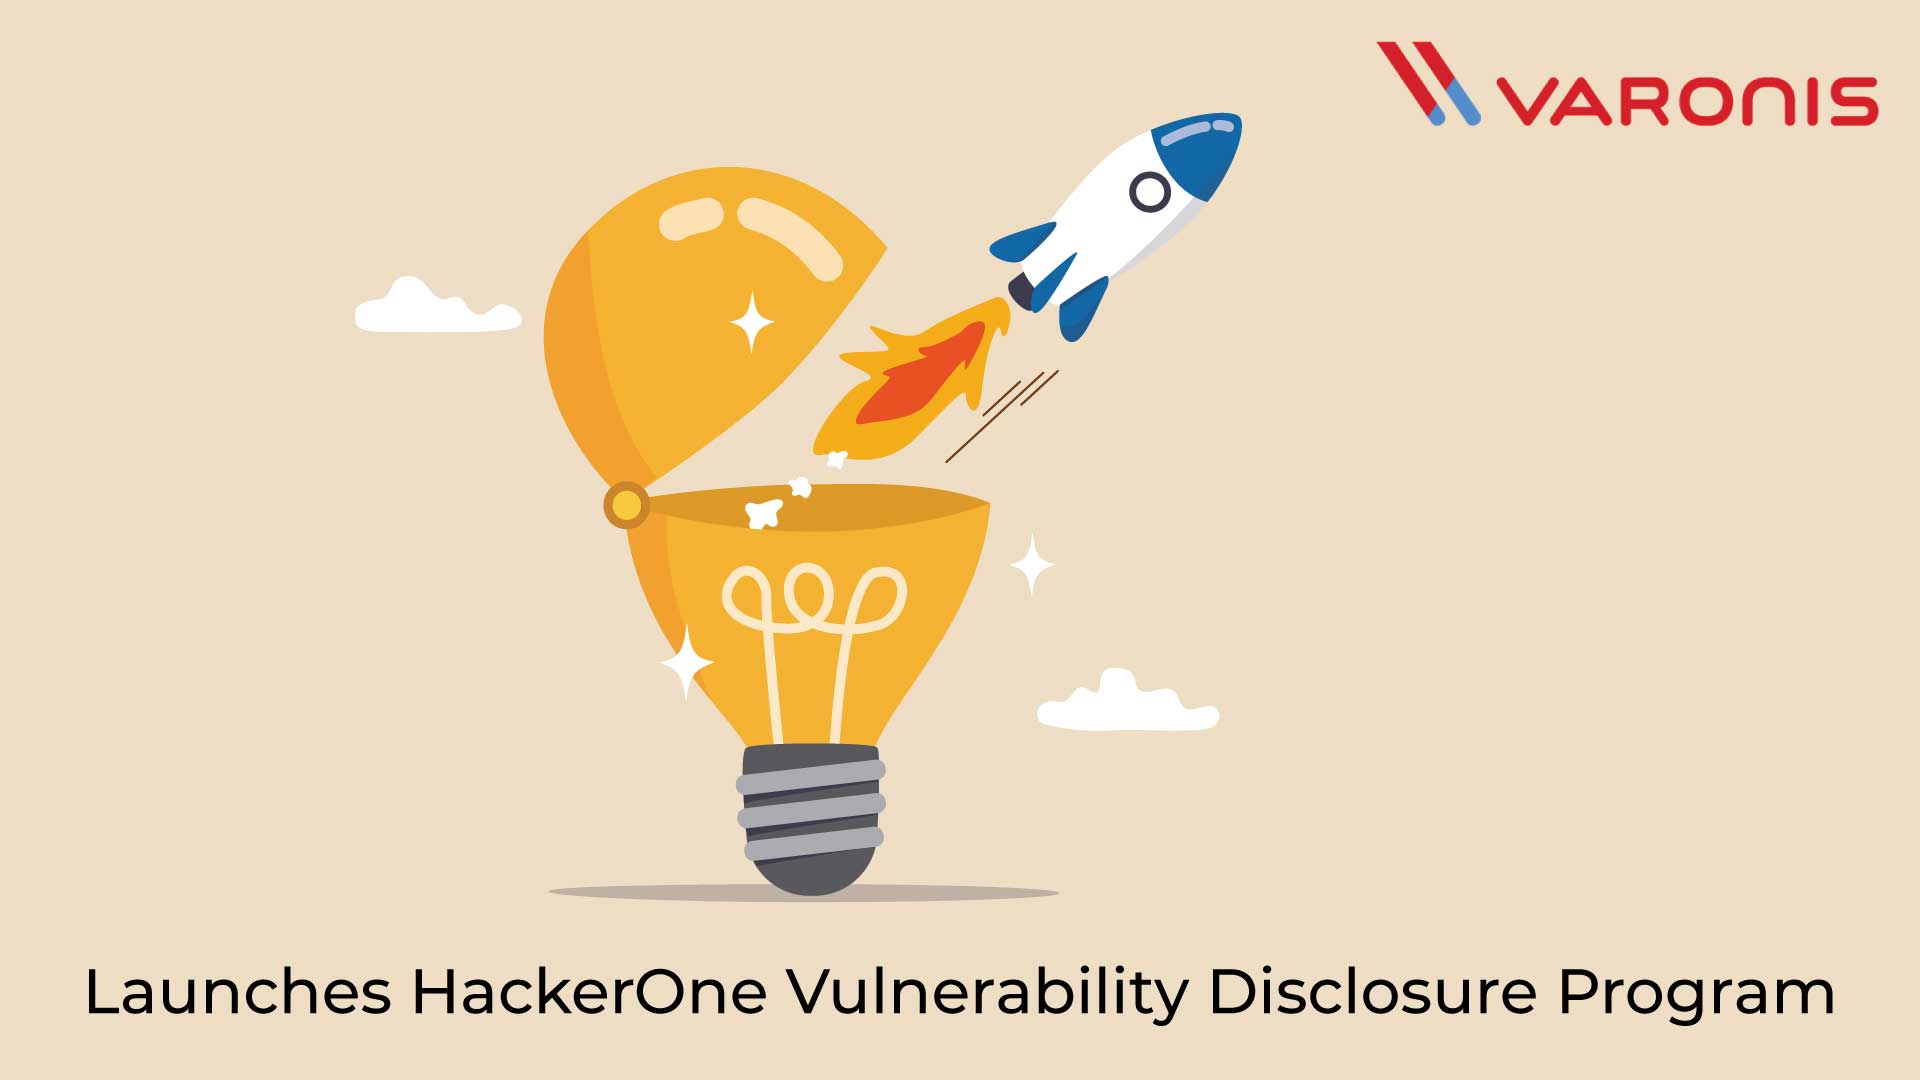 Varonis Launches HackerOne Vulnerability Disclosure Program